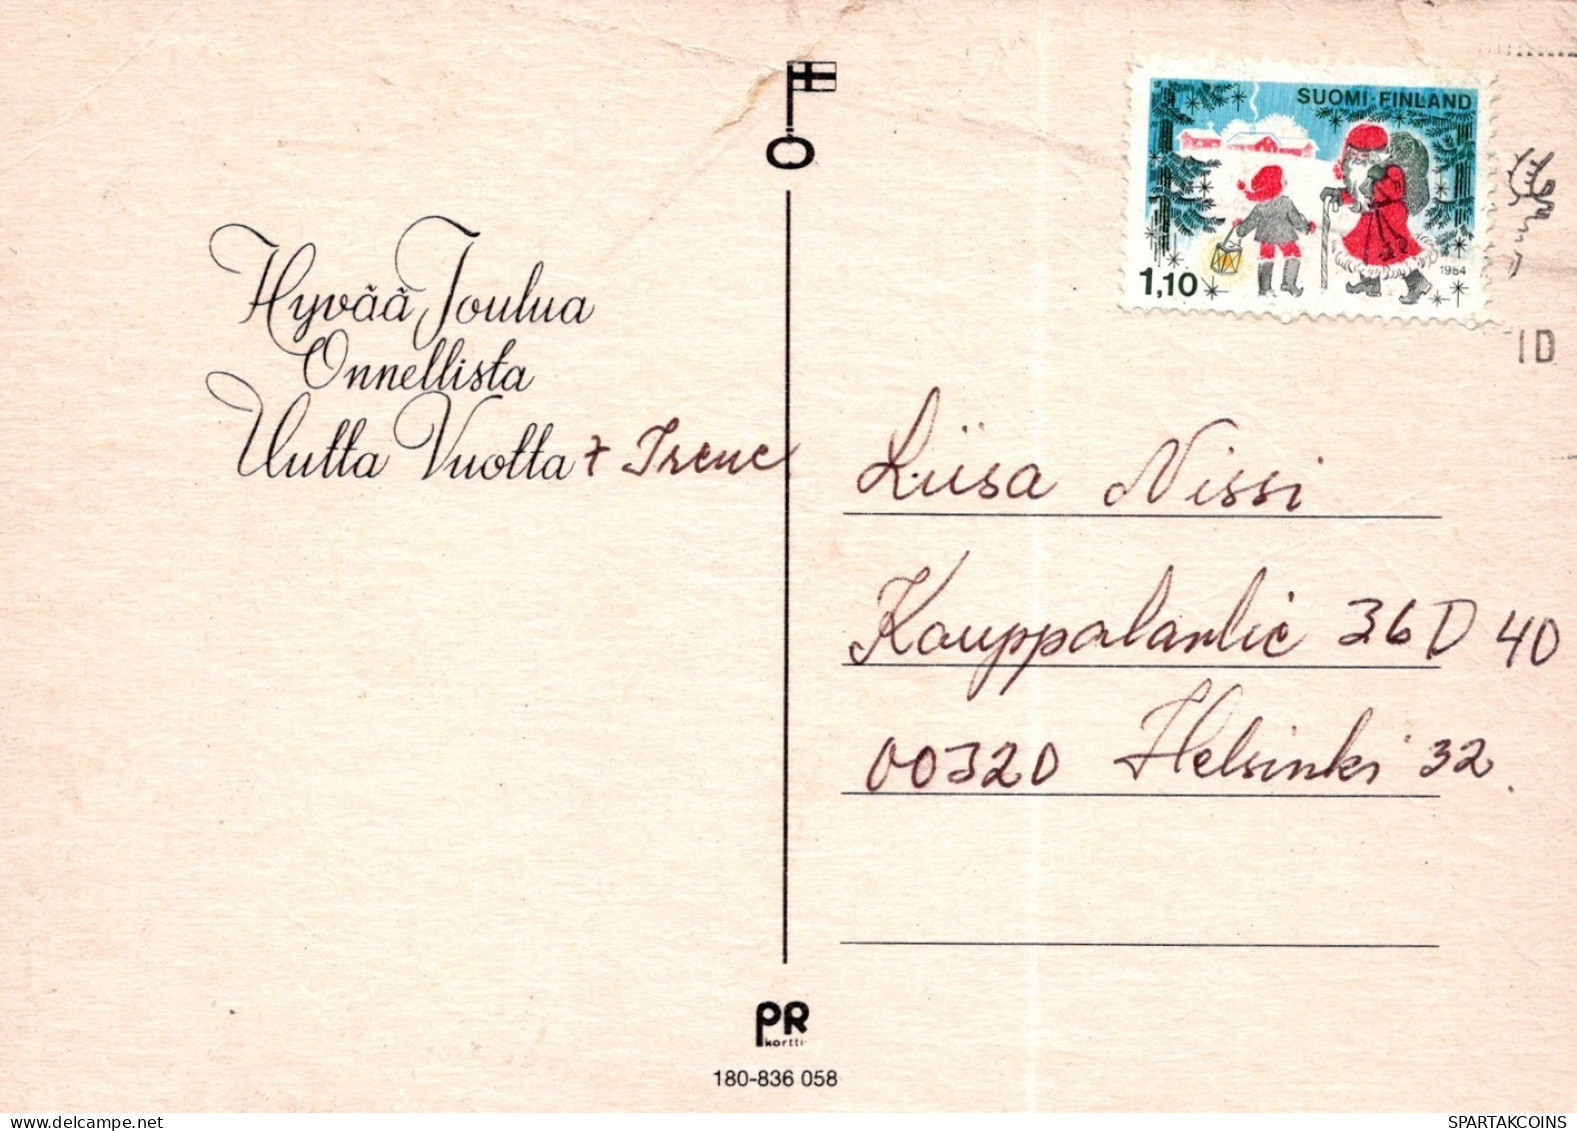 ANGELO Buon Anno Natale Vintage Cartolina CPSM #PAG990.IT - Engel